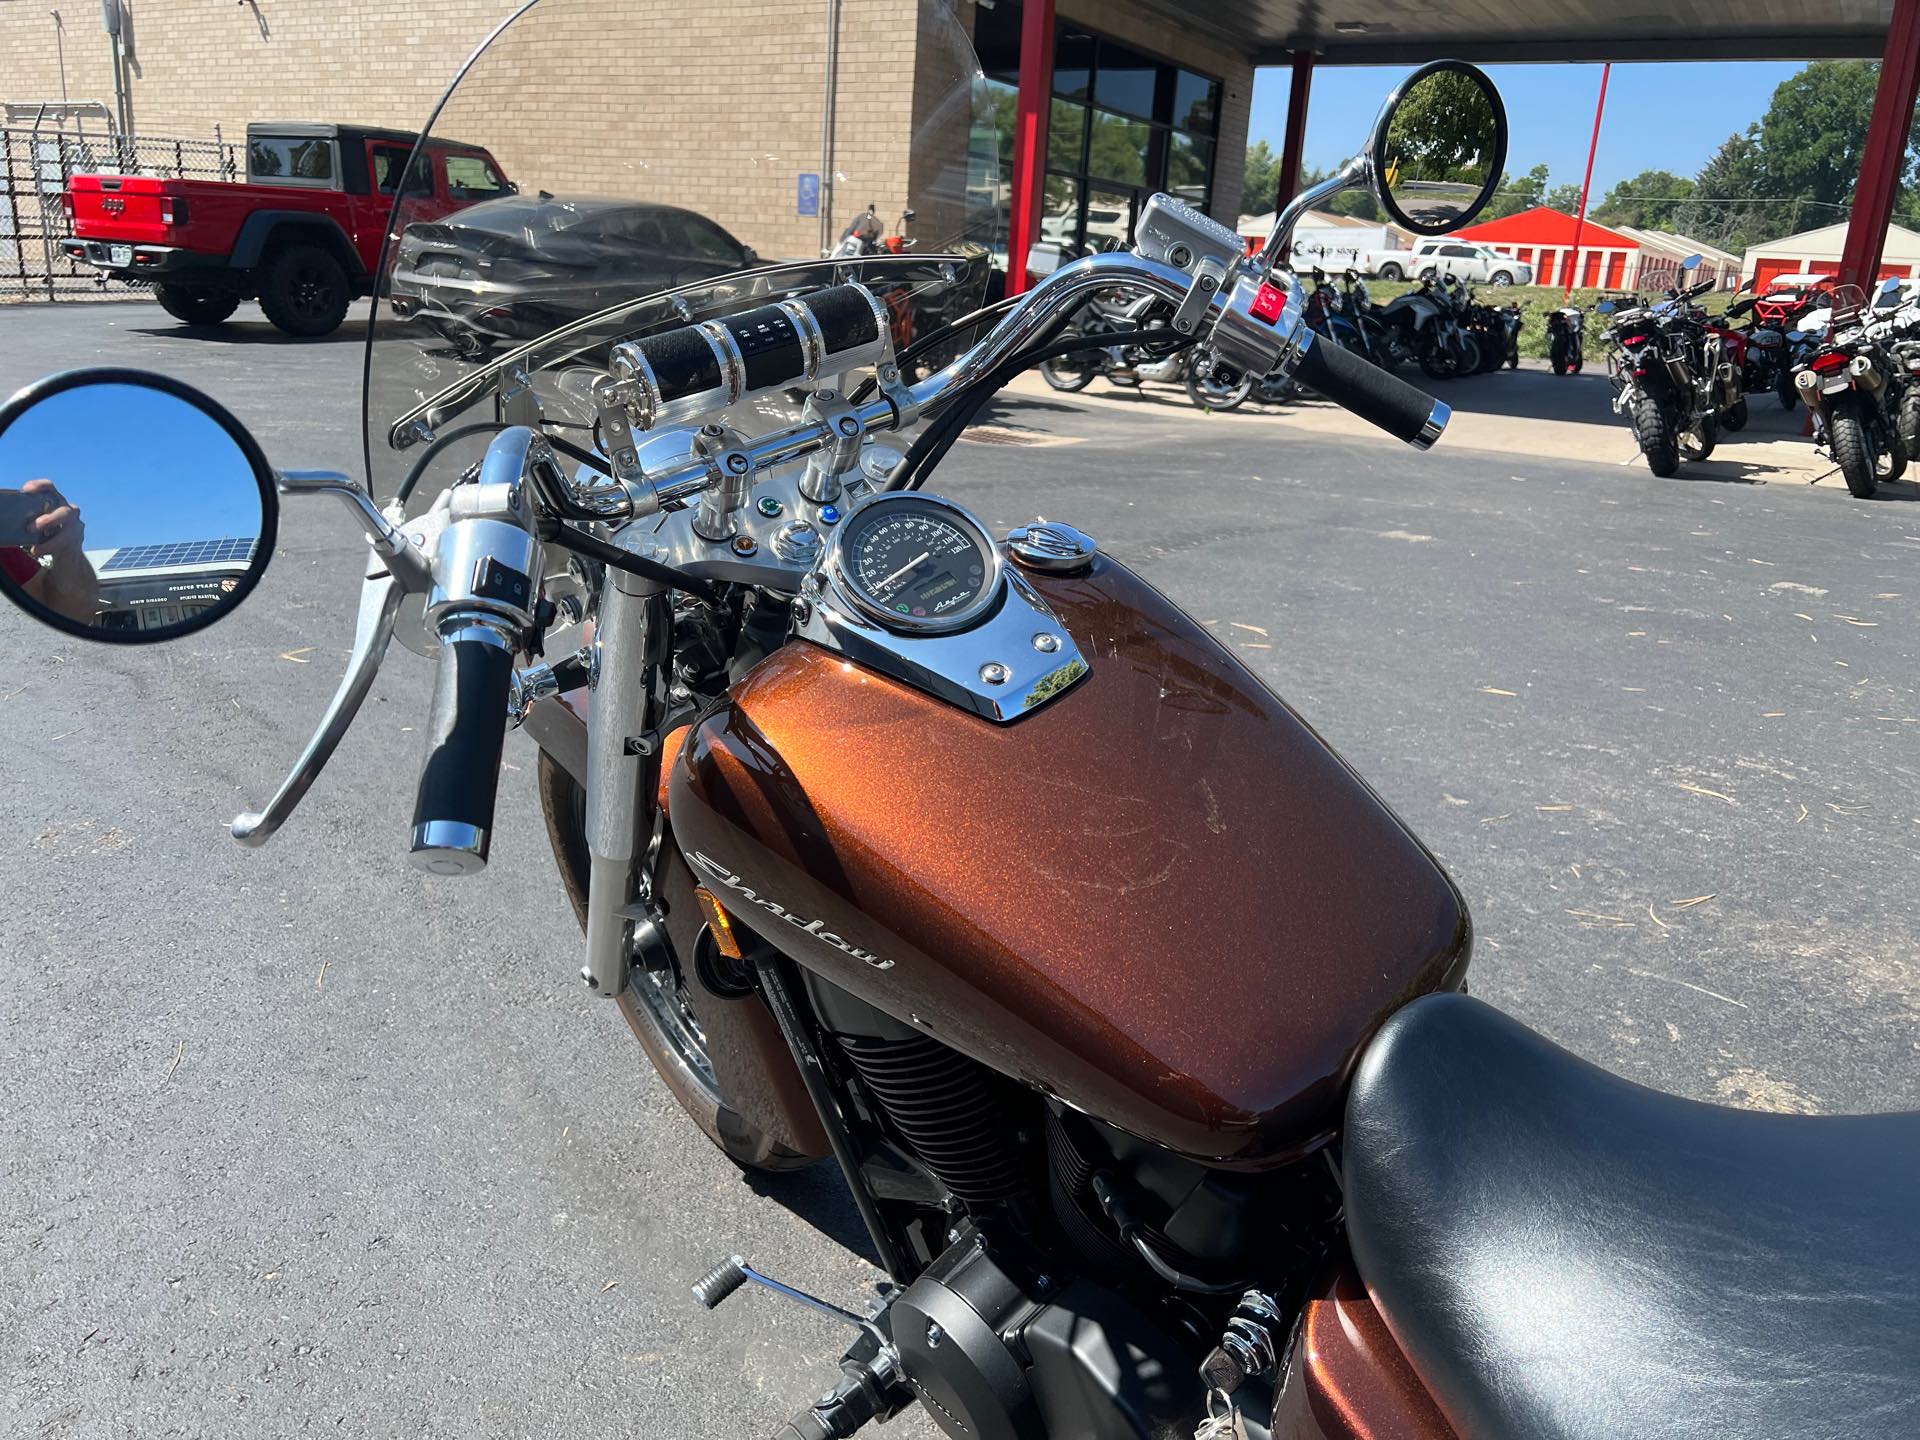 2020 Honda Shadow Aero at Aces Motorcycles - Fort Collins